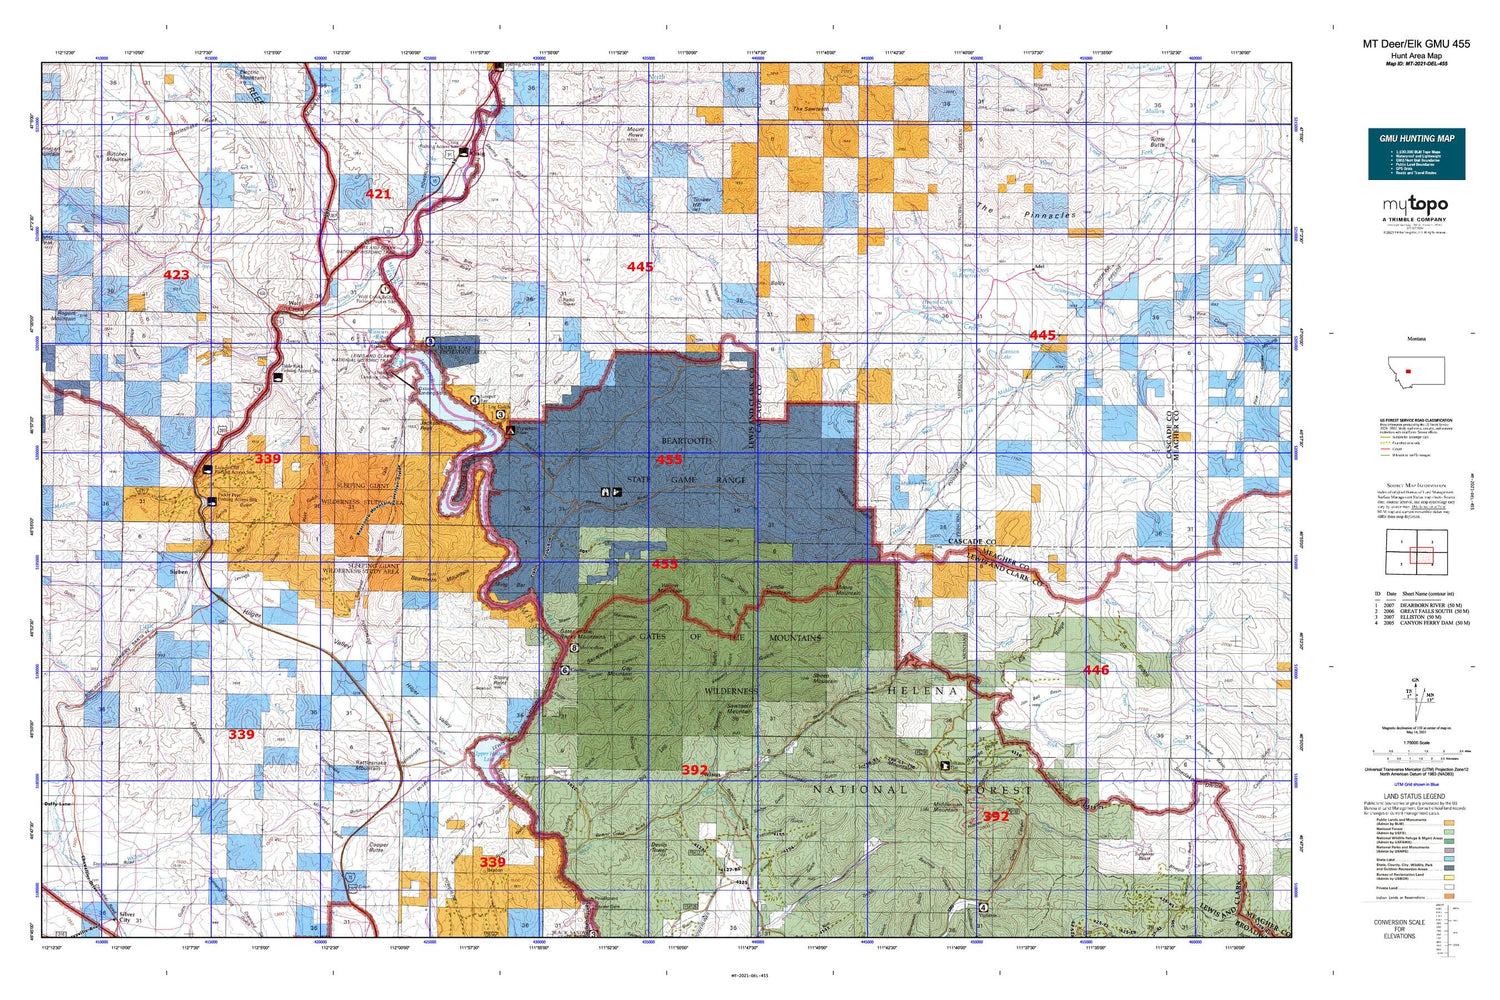 Montana Deer/Elk GMU 455 Map Image